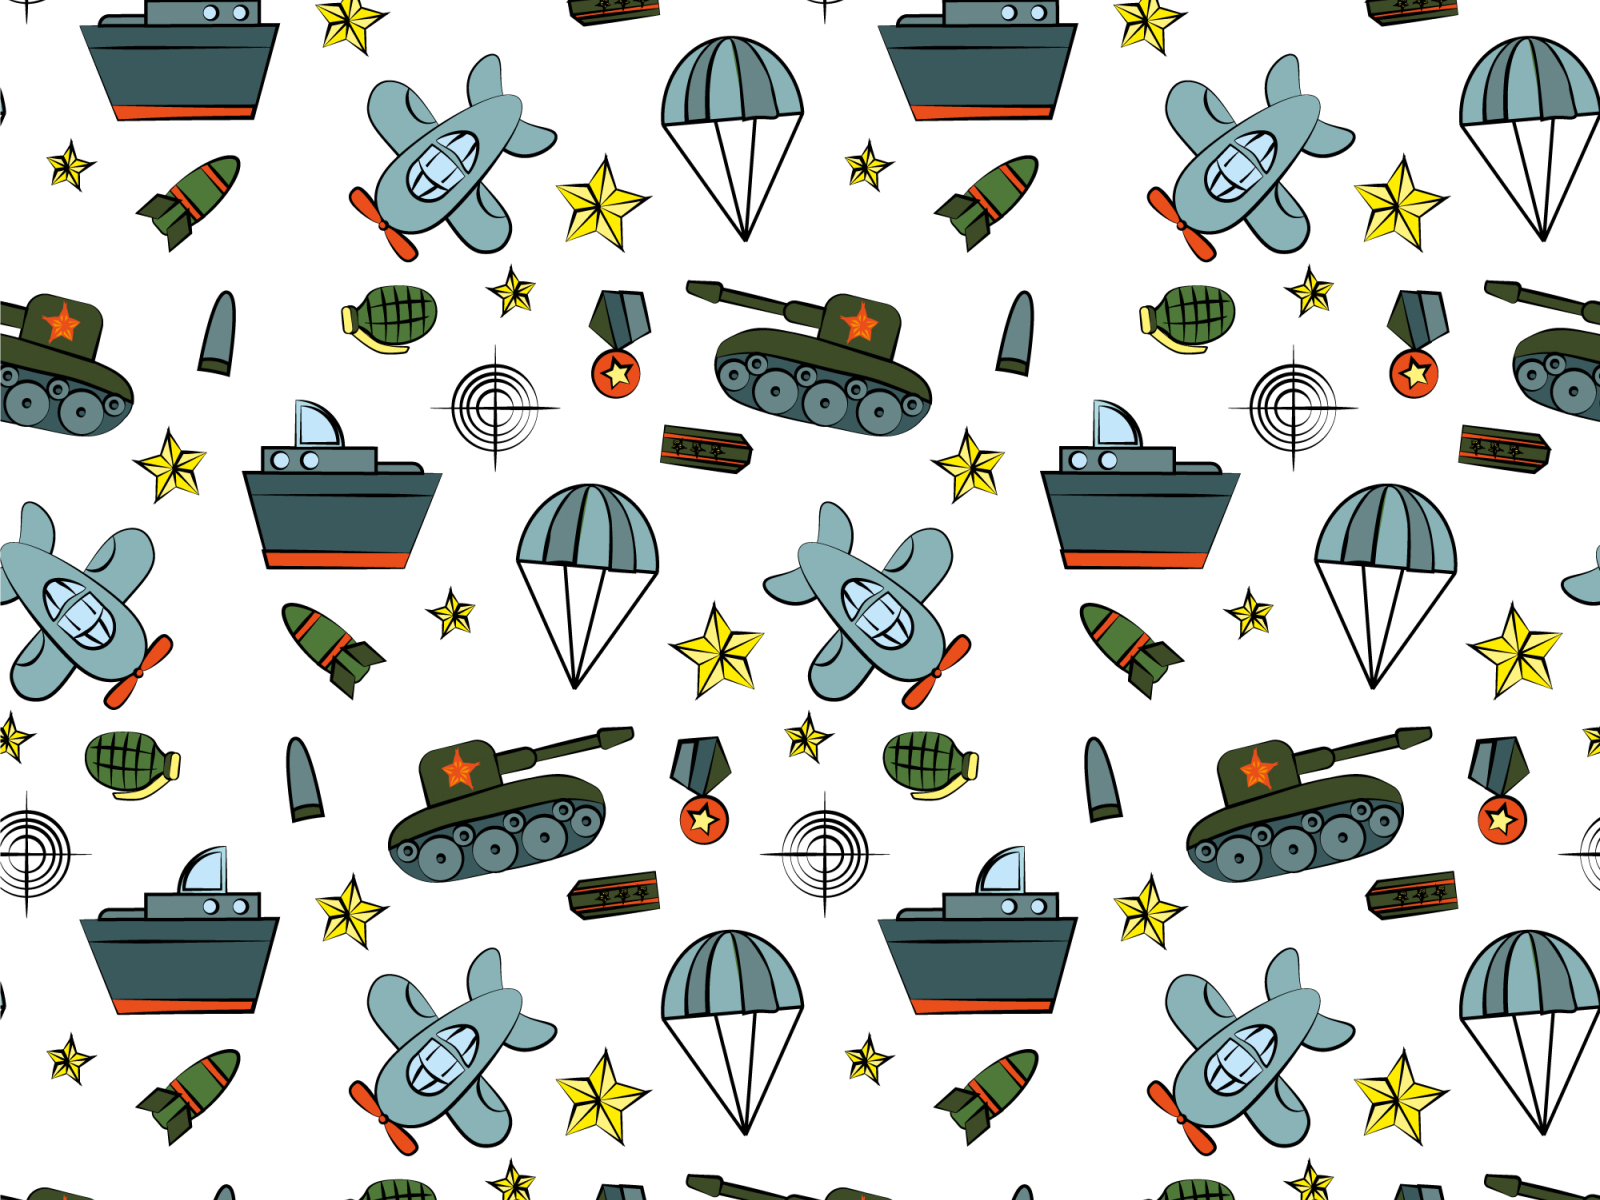 pattern with military equipment by Tatiana Popova on Dribbble